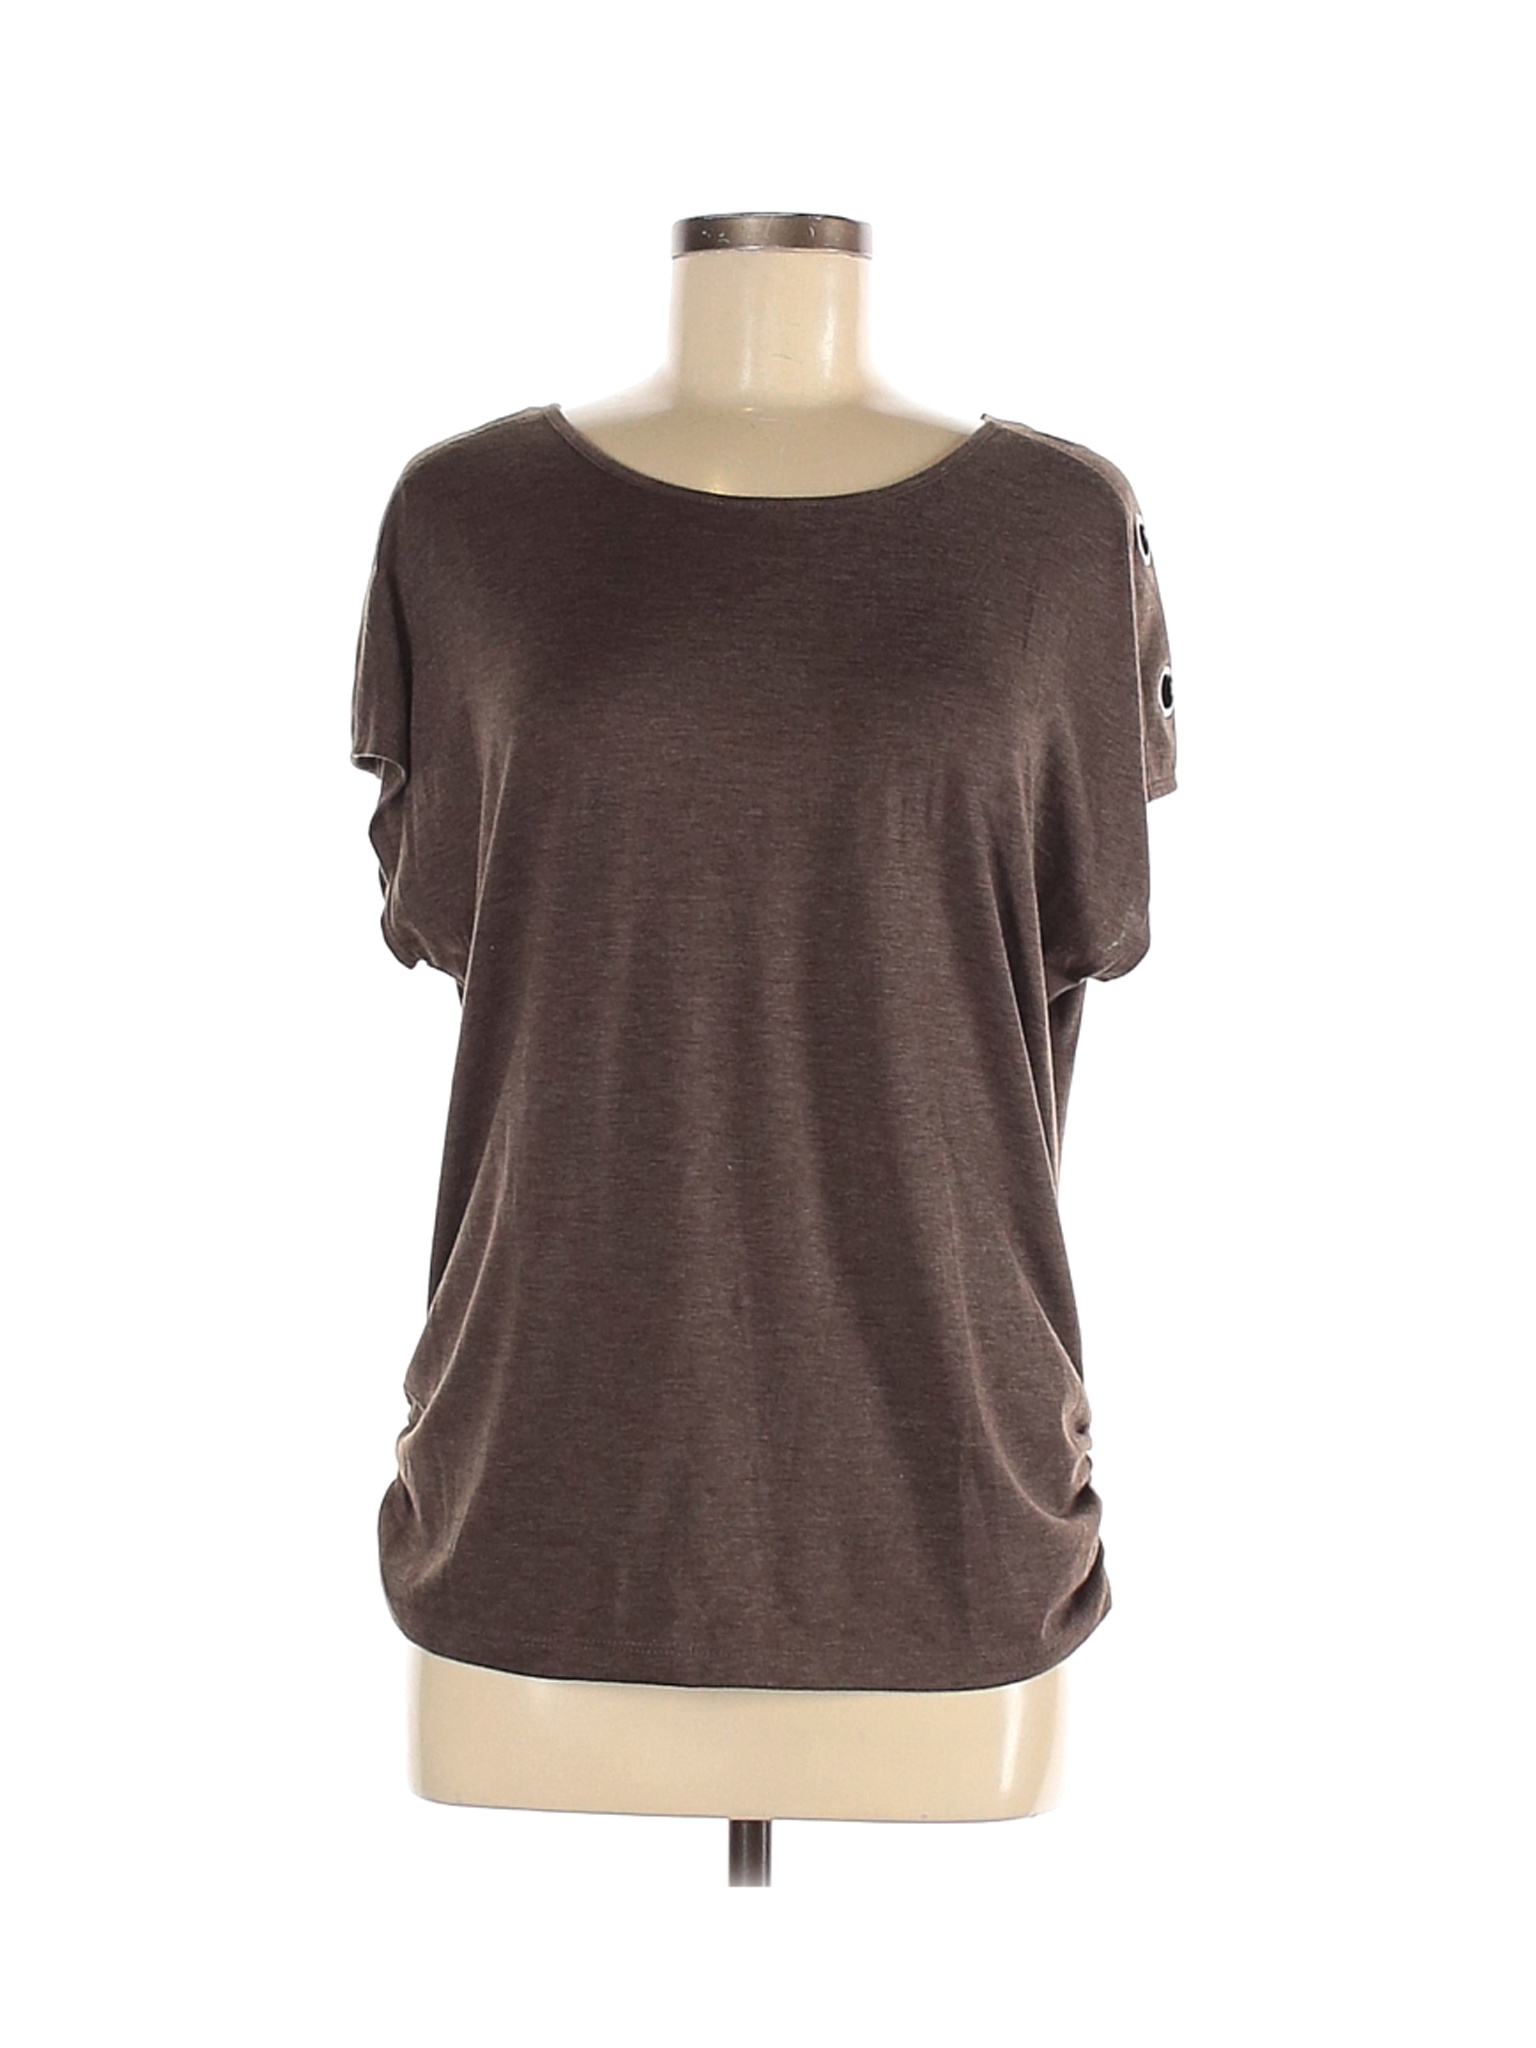 Perseption Concept Women Brown Short Sleeve Top M | eBay